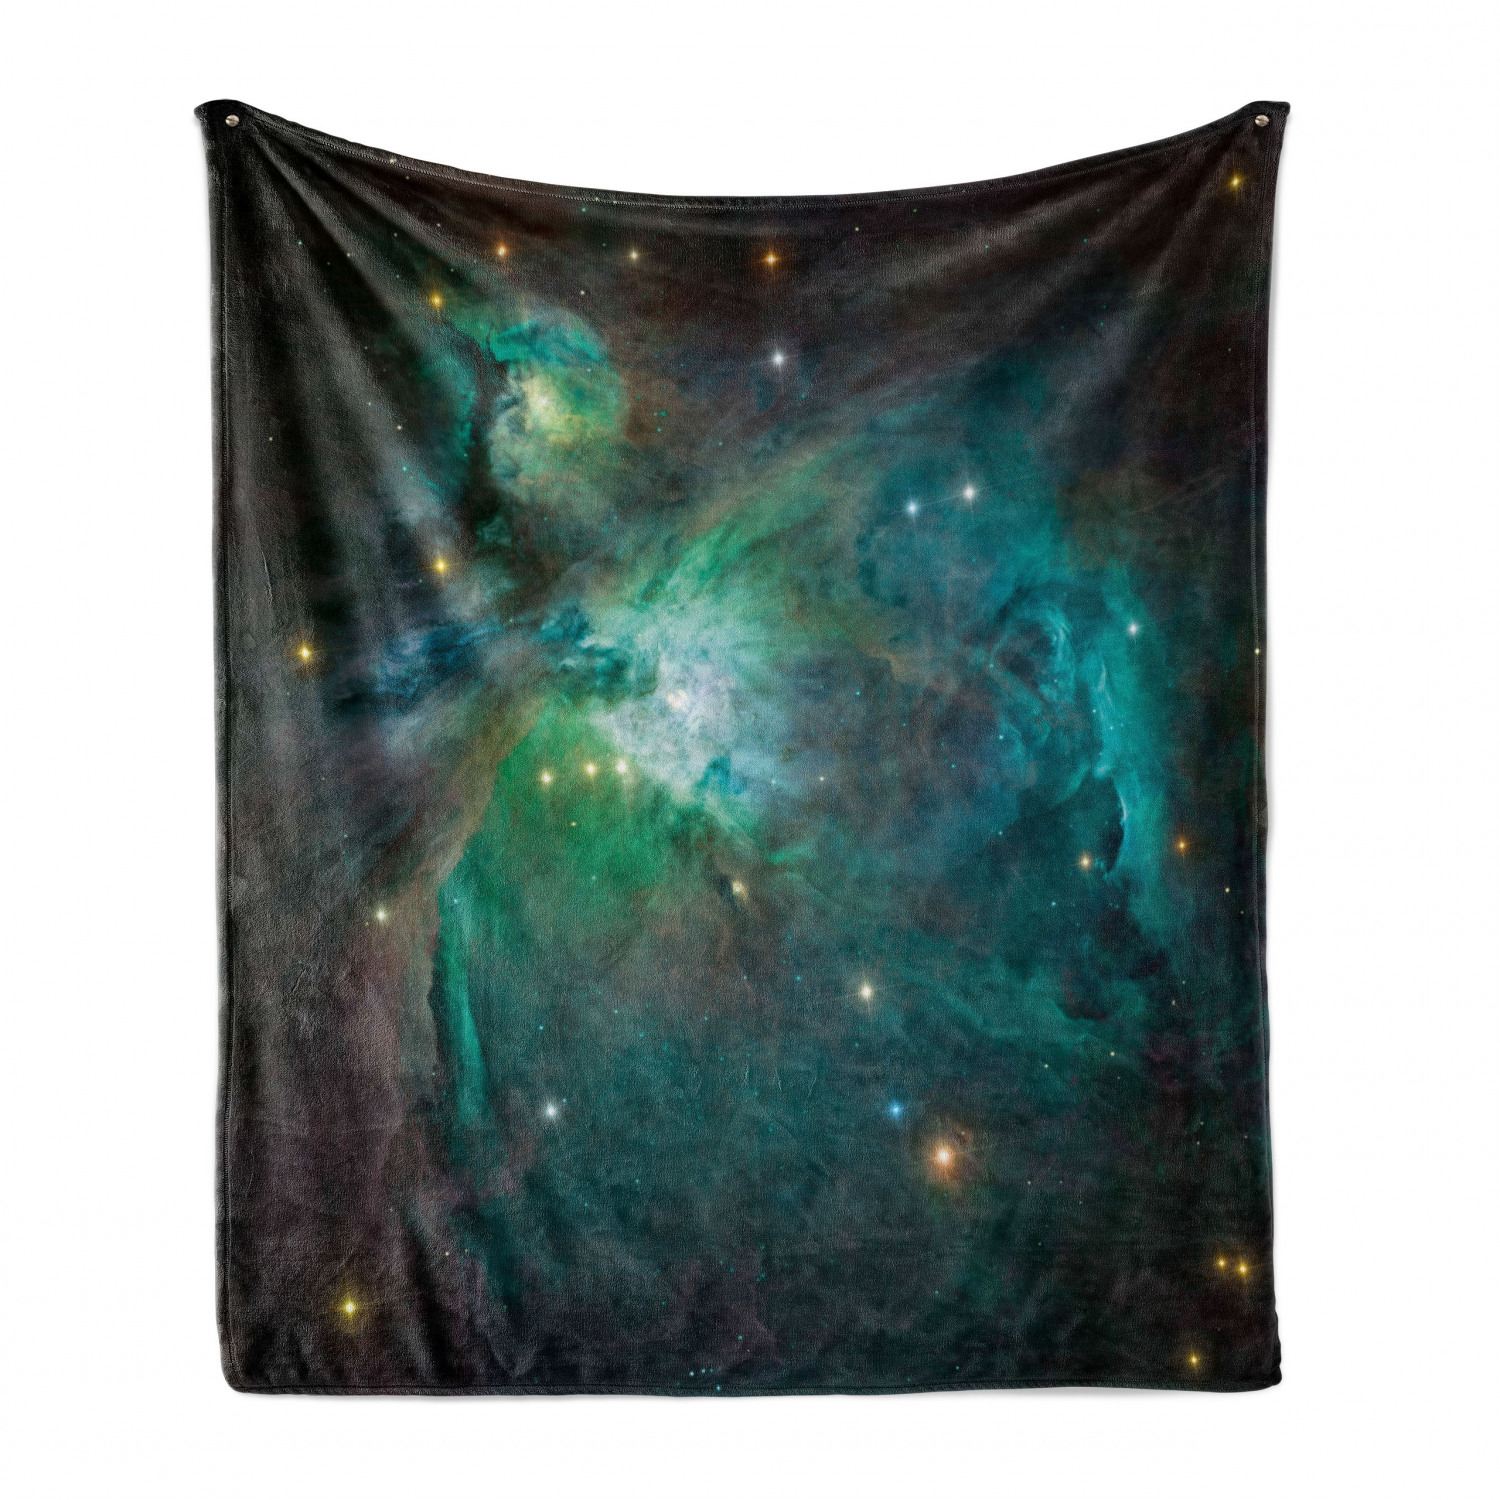 Blue Nebula Digital Art Energy Flame Plasma Space Wallpapers